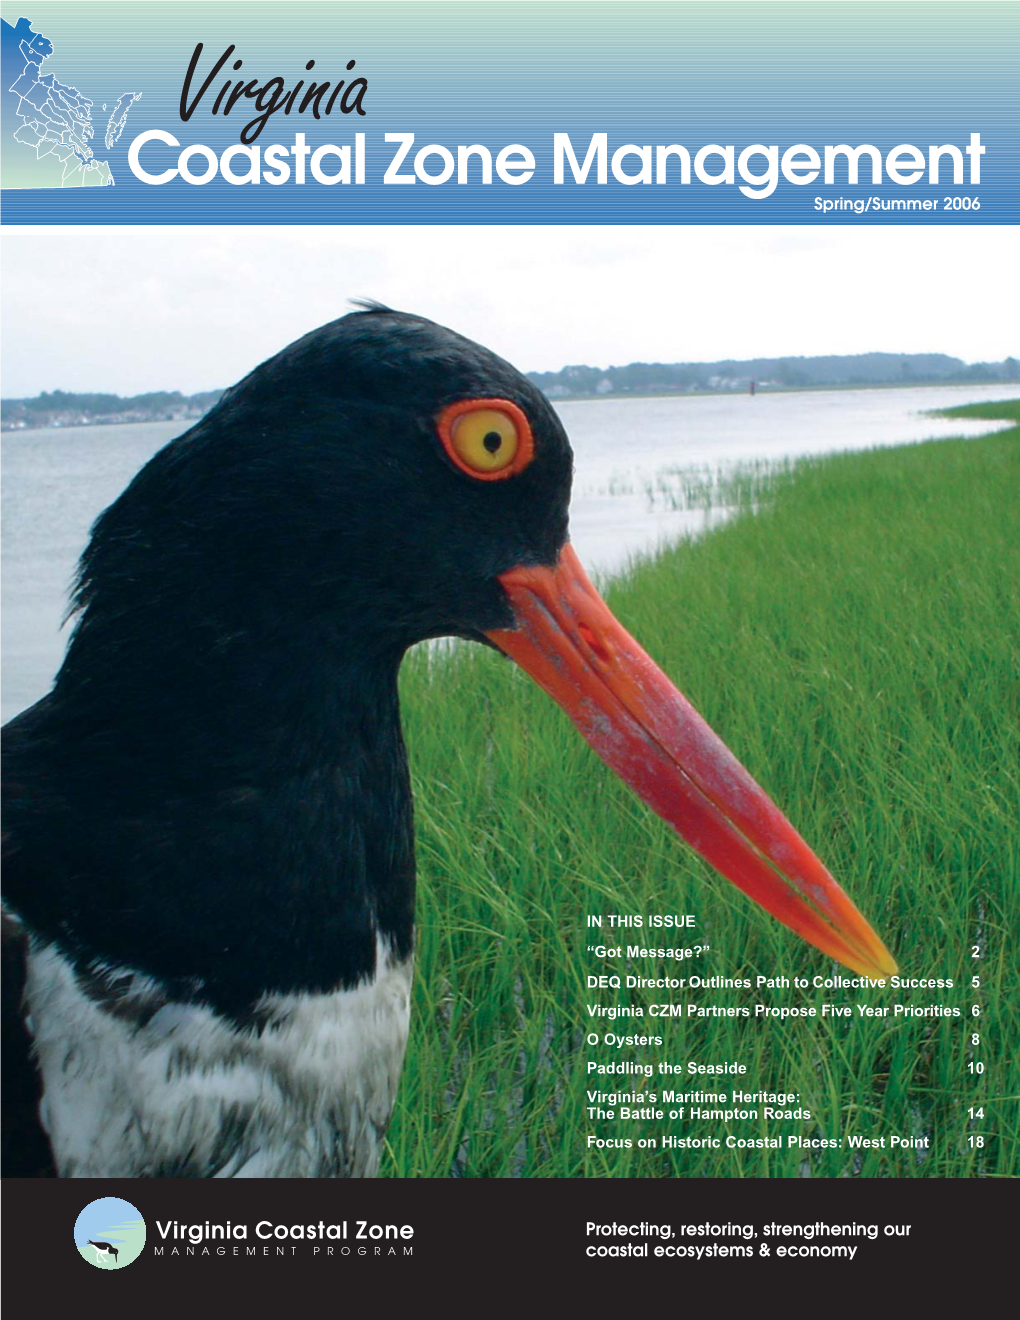 Virginia Coastal Zone Management Magazine Spring/Summer 2006